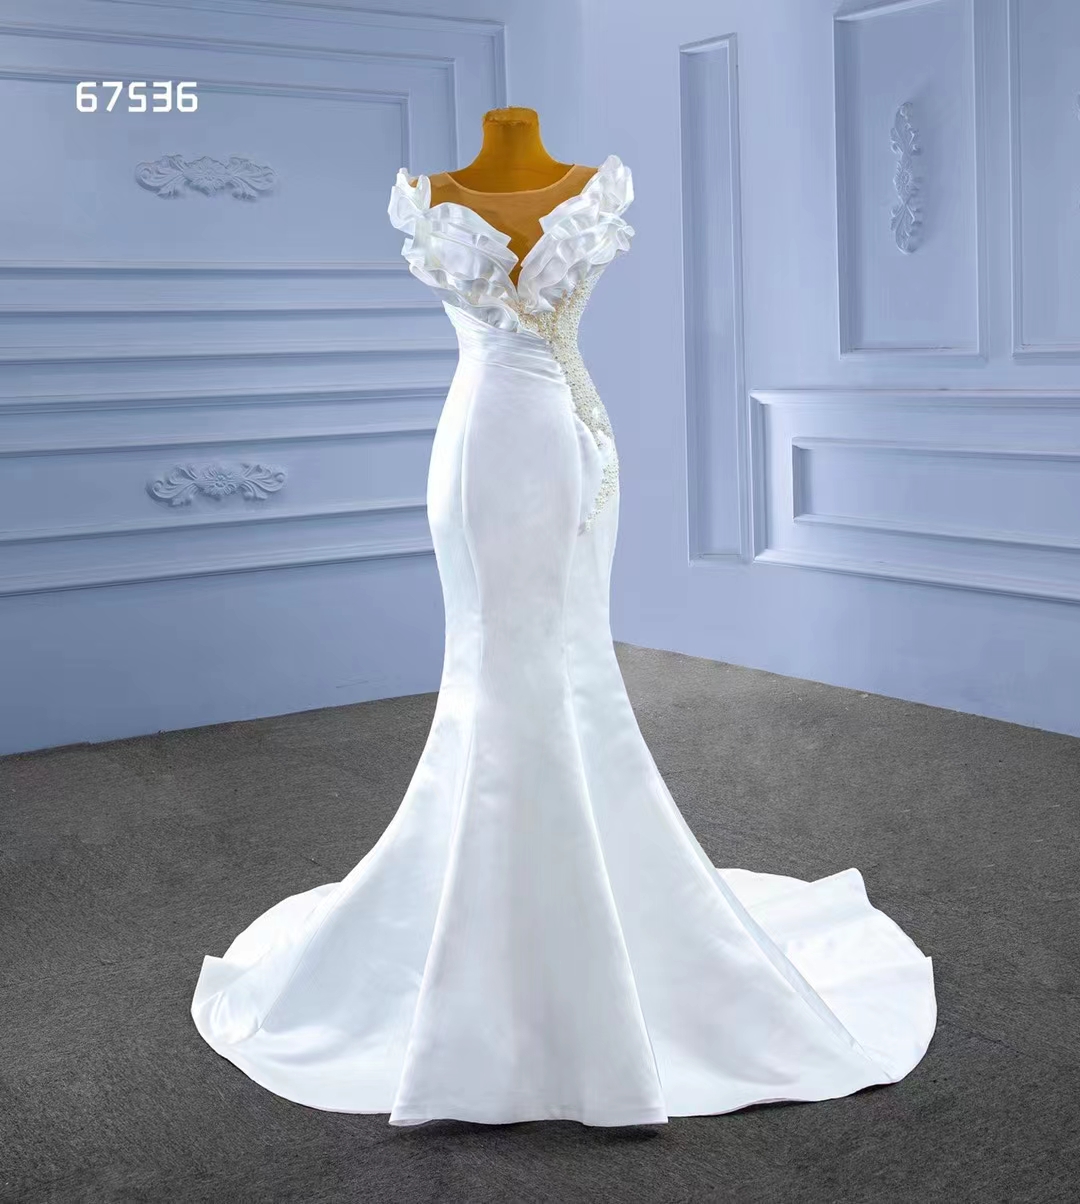 Mermaid Wedding Dress Sexy Soft Satin White Trend Design Partial Beading SM67536